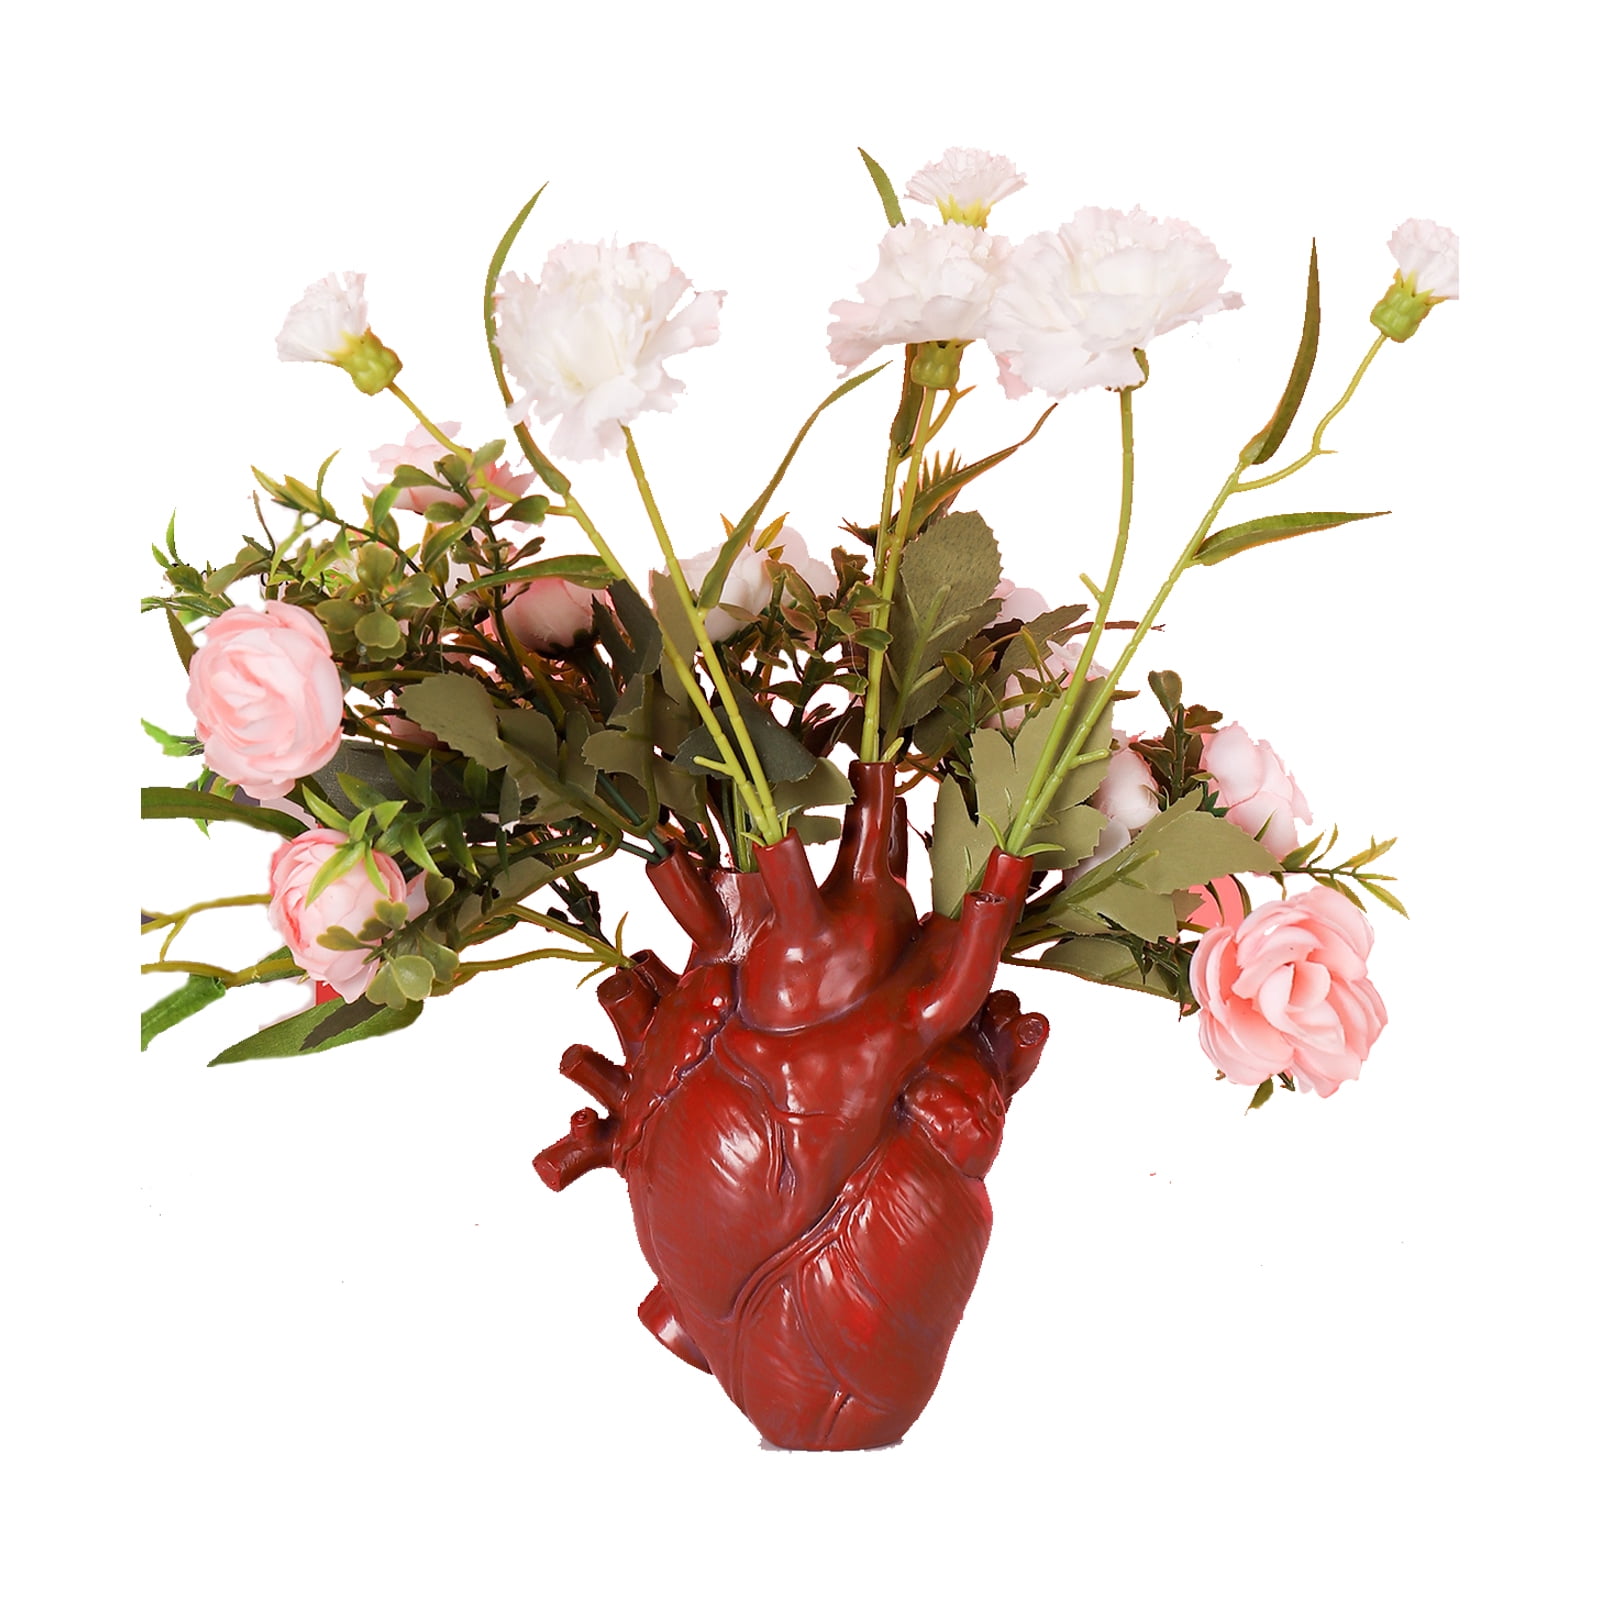 Anatomical Heart Resin Vase Flower Pot Desktop Ornament Home Decor